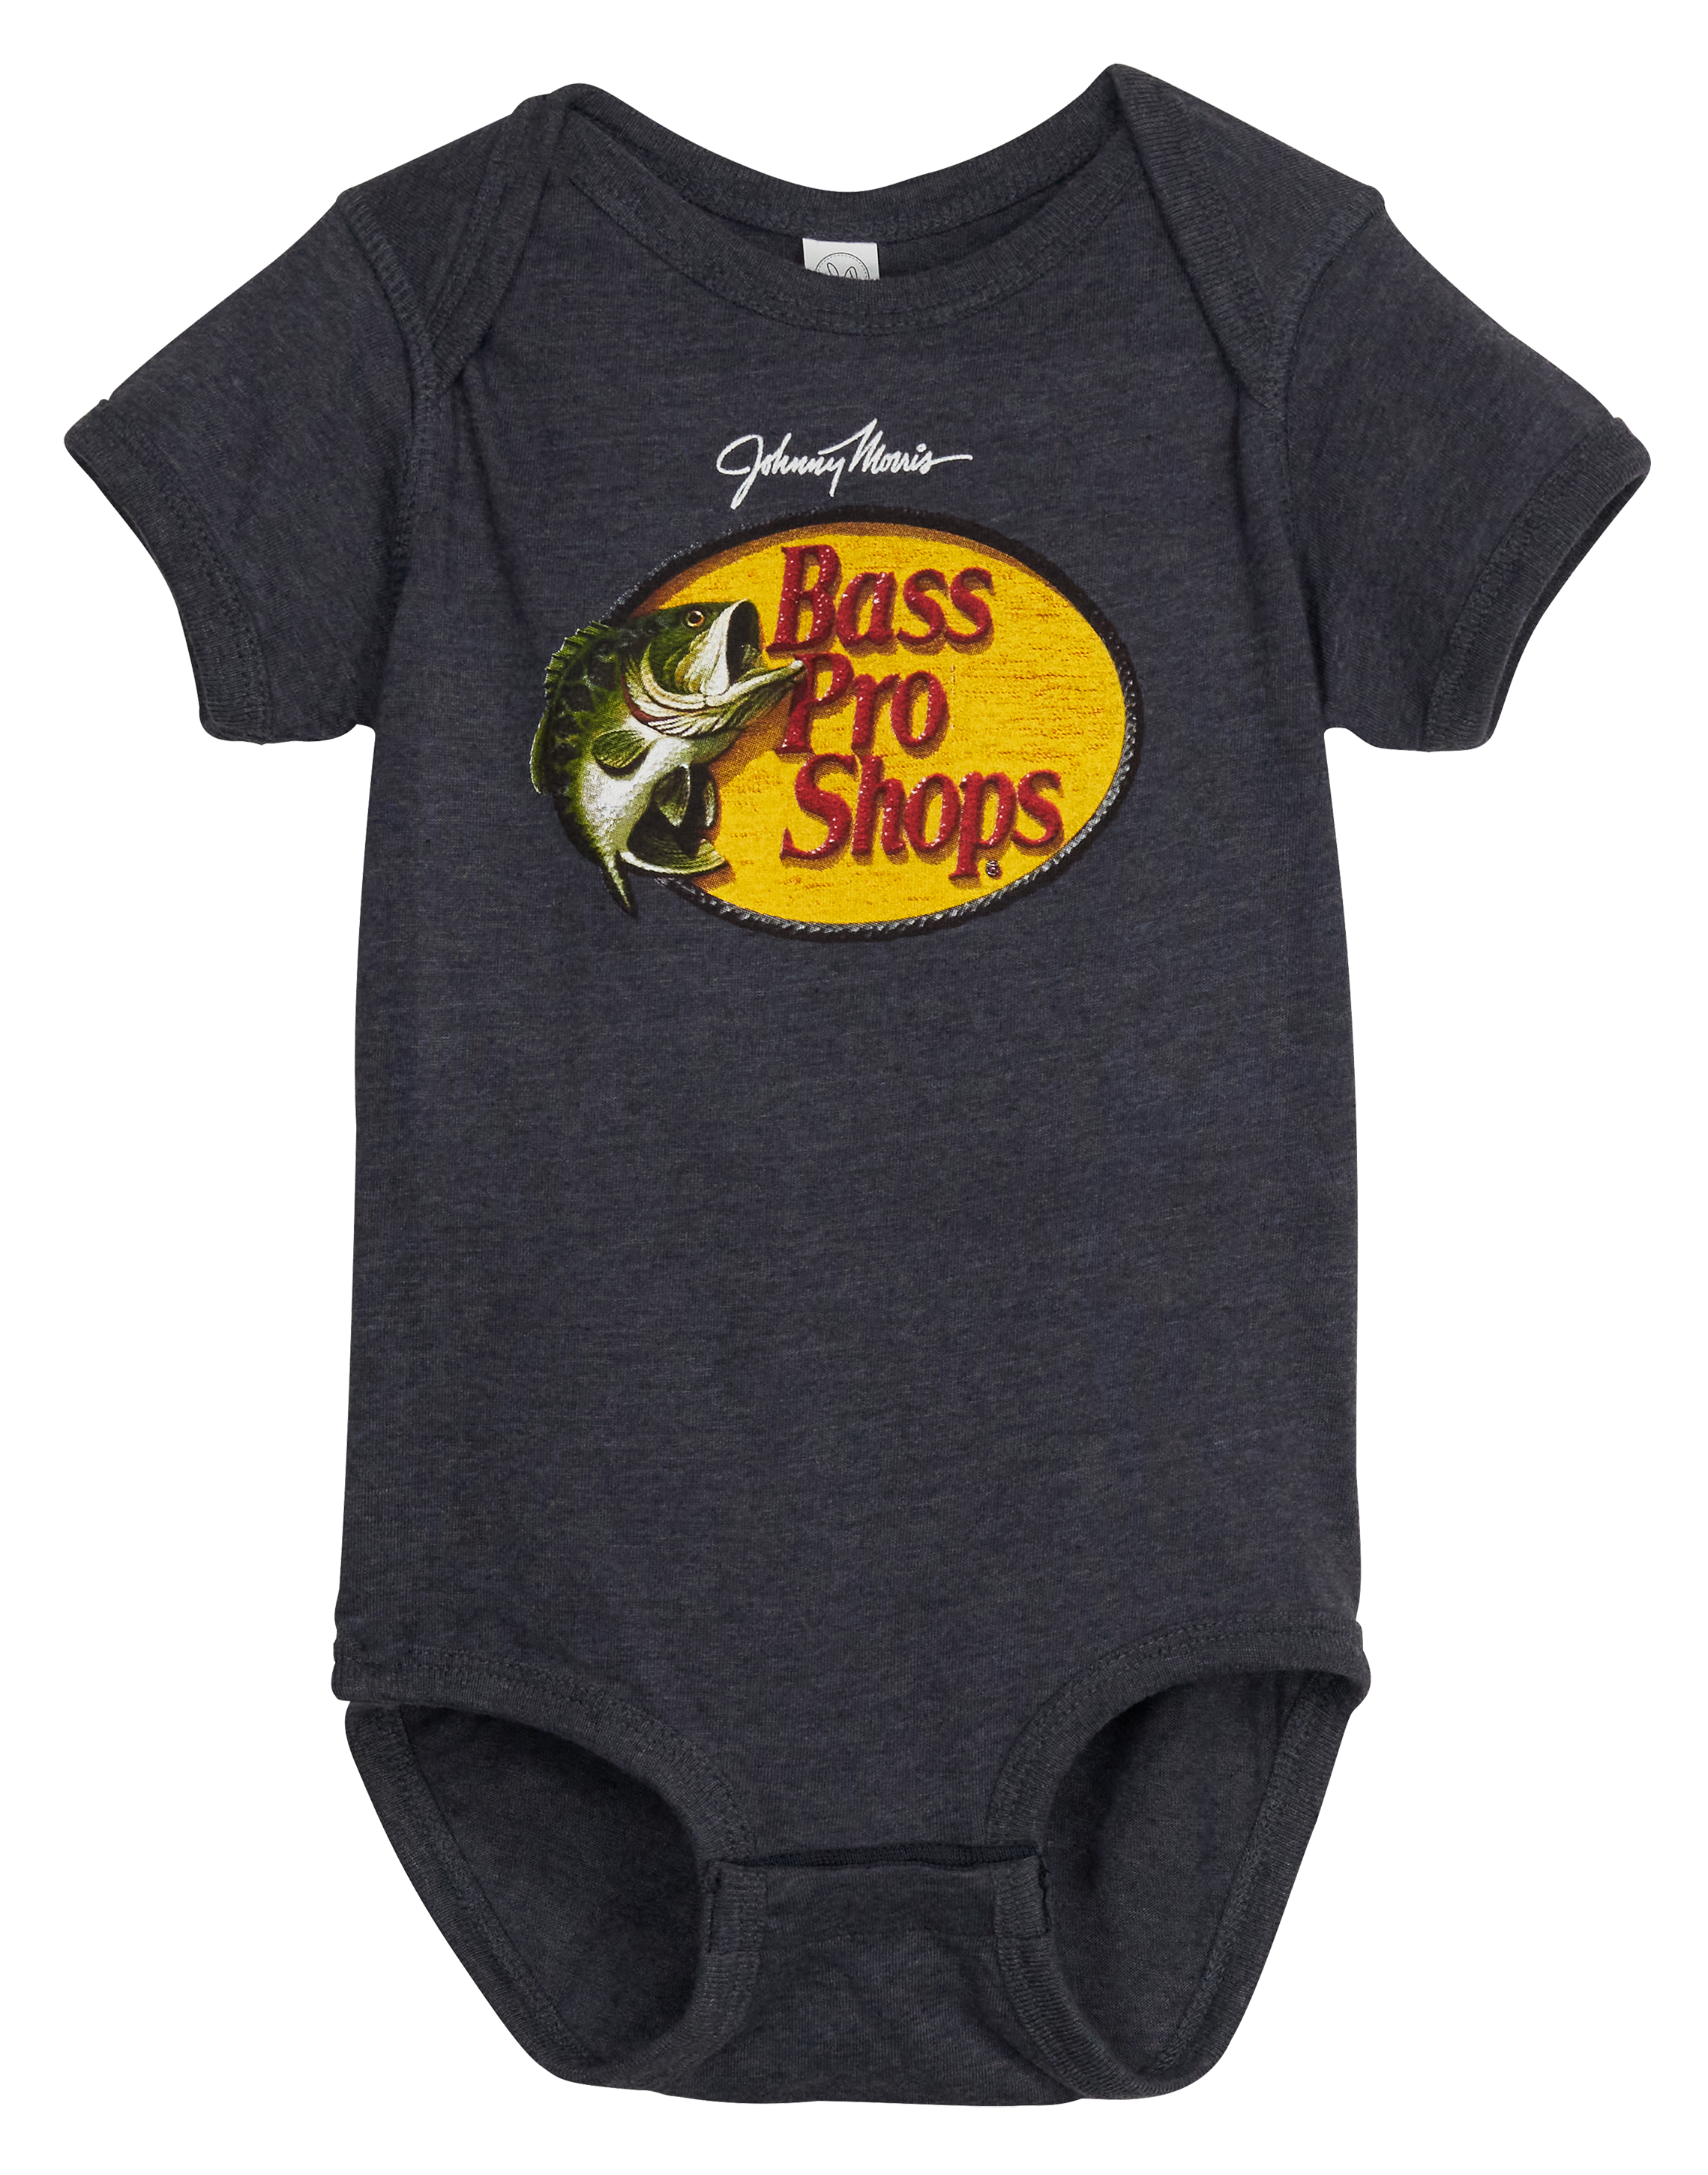 Bass Pro Shops Future Fishing Buddy Short-Sleeve Bodysuit for Babies